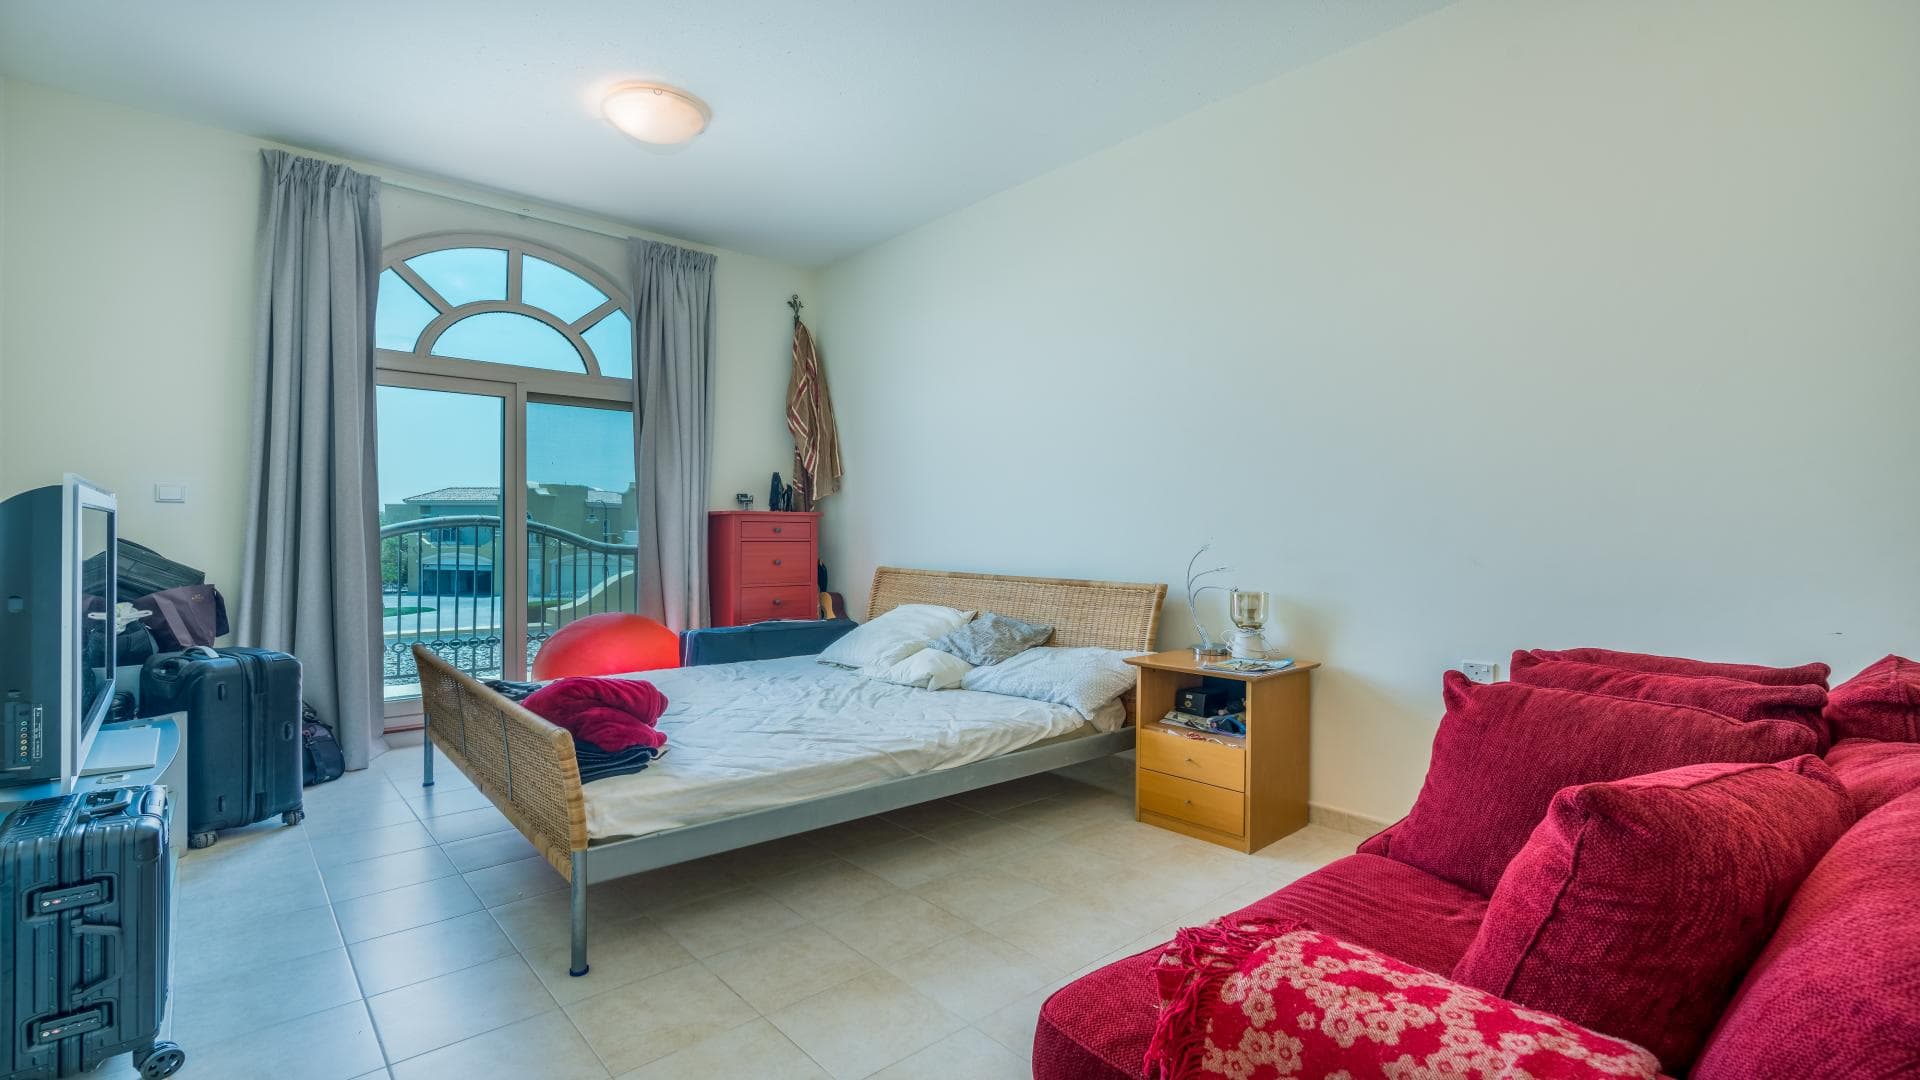 5 Bedroom Villa For Rent Al Thamam 35 Lp19427 236d6dce81866400.jpg